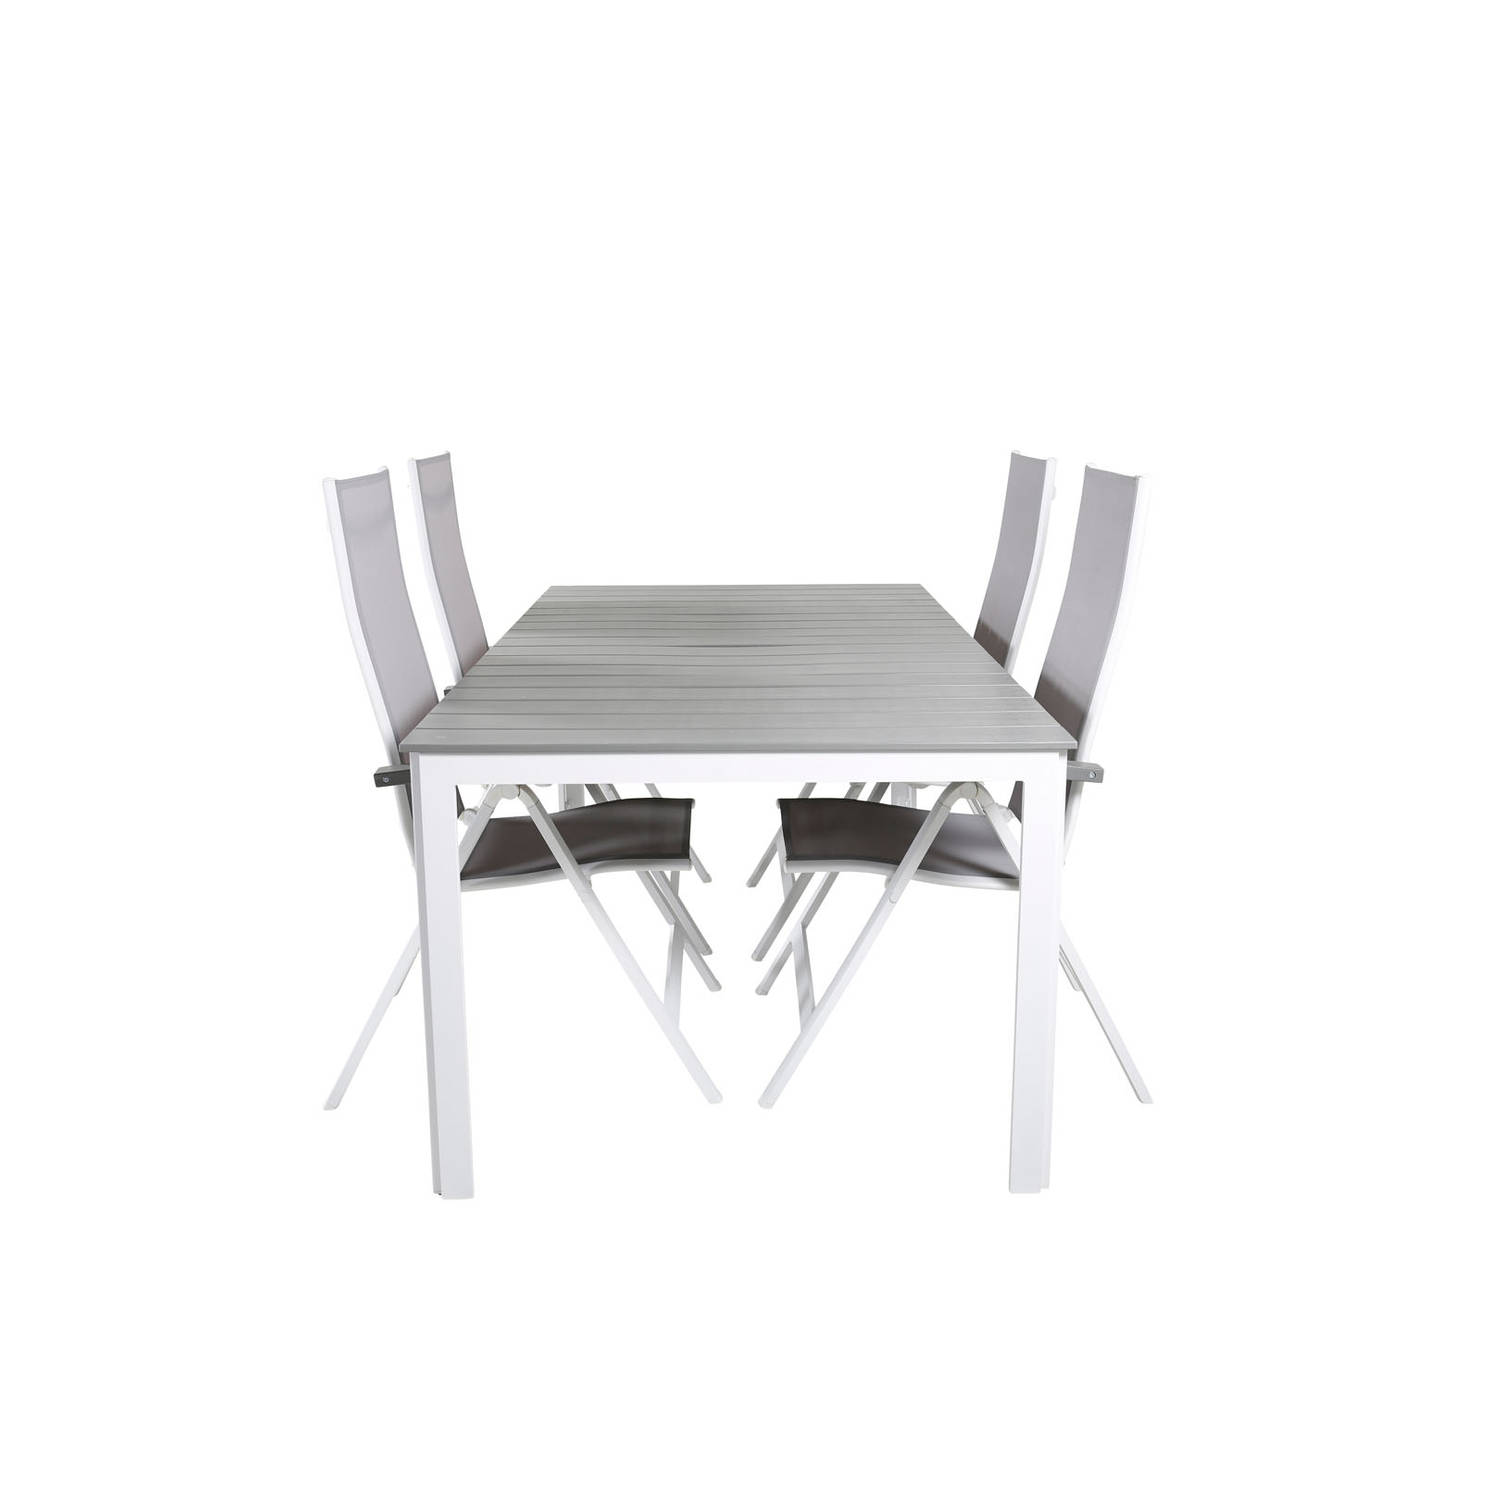 Parma tuinmeubelset tafel 100x200cm en 4 stoel Albany wit, grijs.